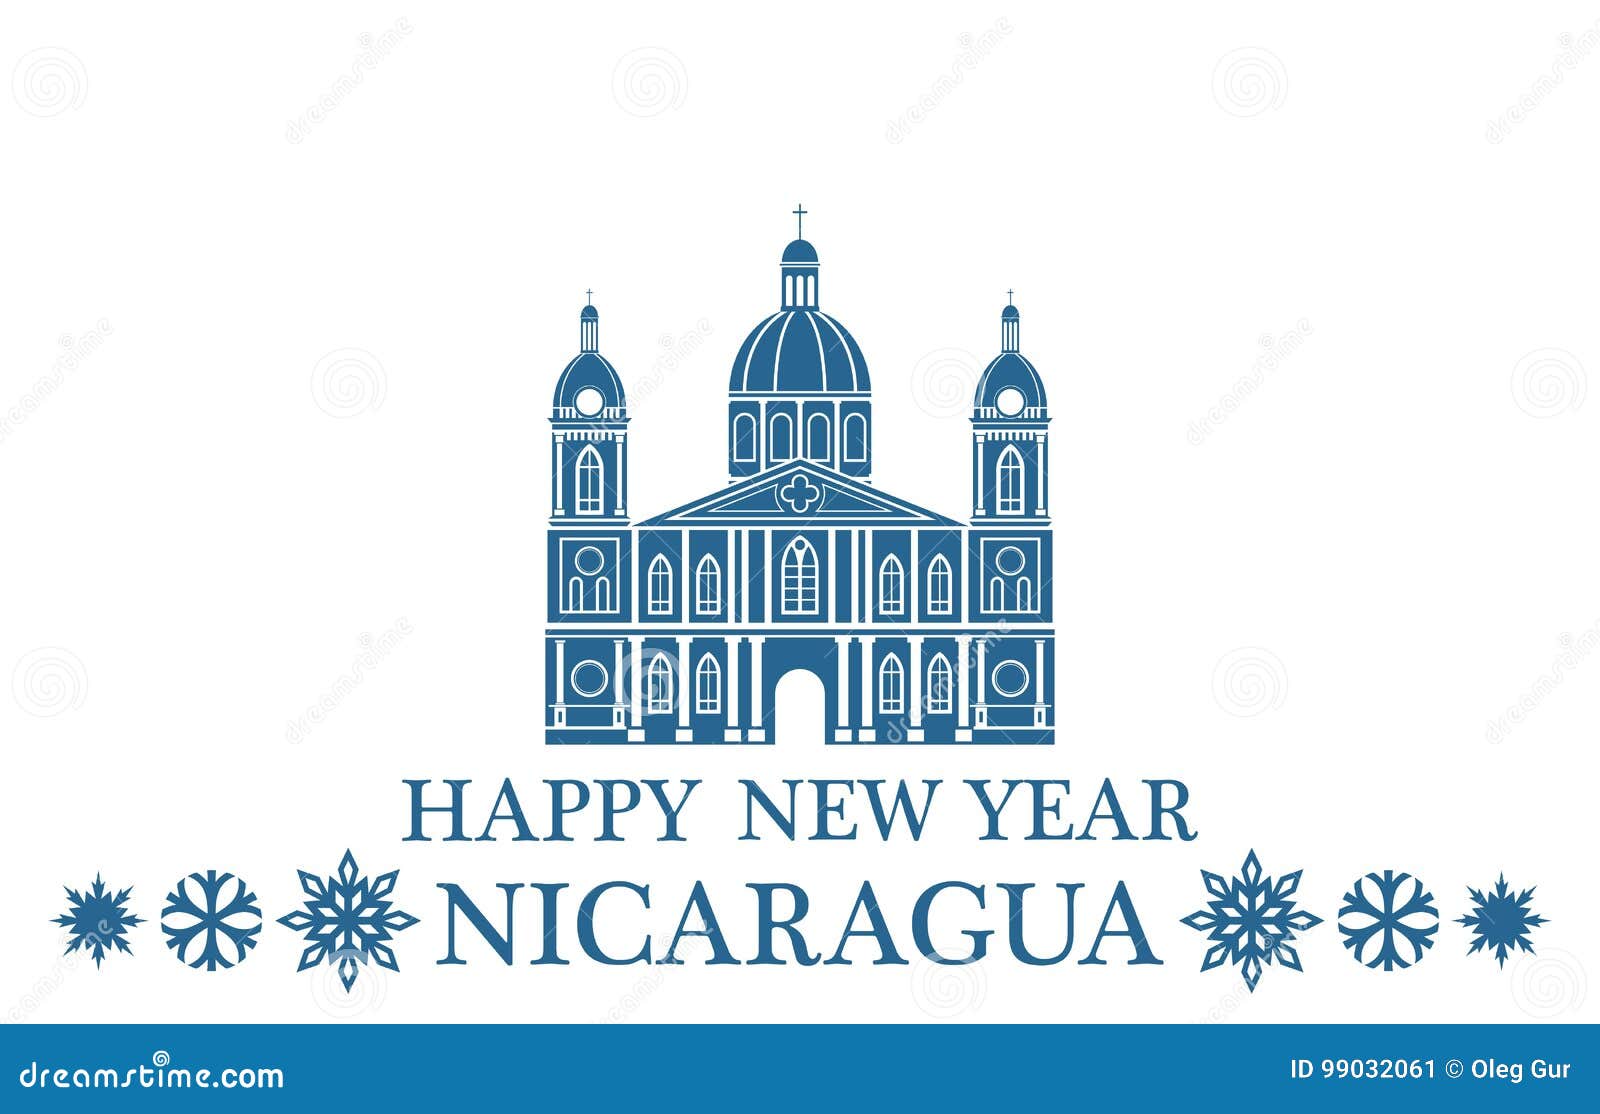 greeting card nicaragua